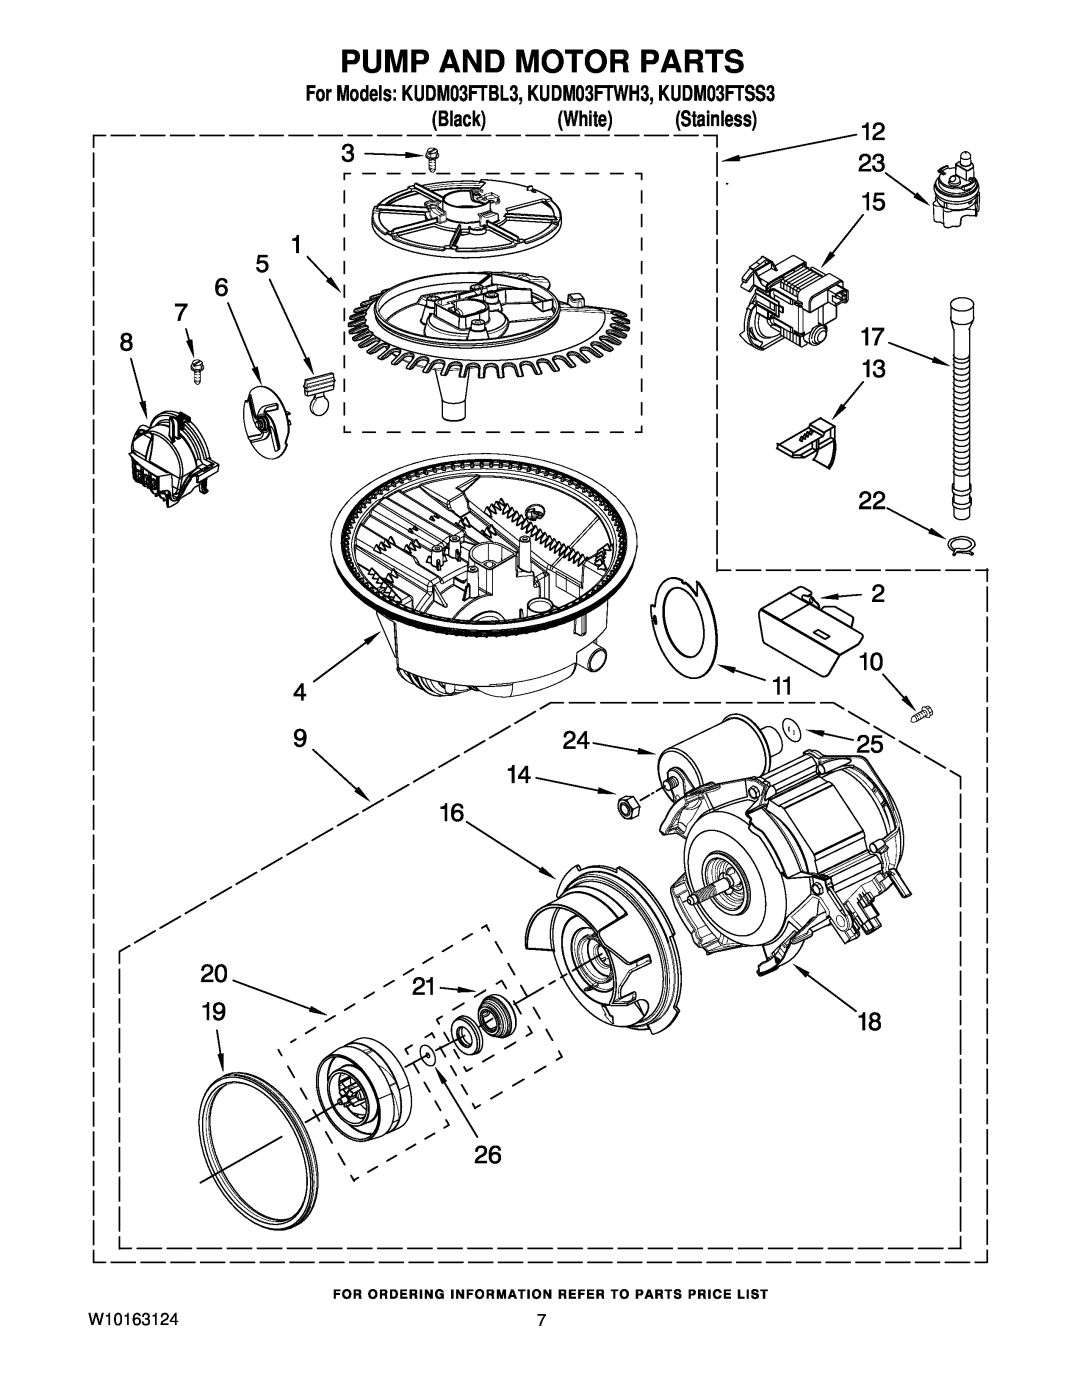 KitchenAid manual Pump And Motor Parts, For Models KUDM03FTBL3, KUDM03FTWH3, KUDM03FTSS3, Black White Stainless 